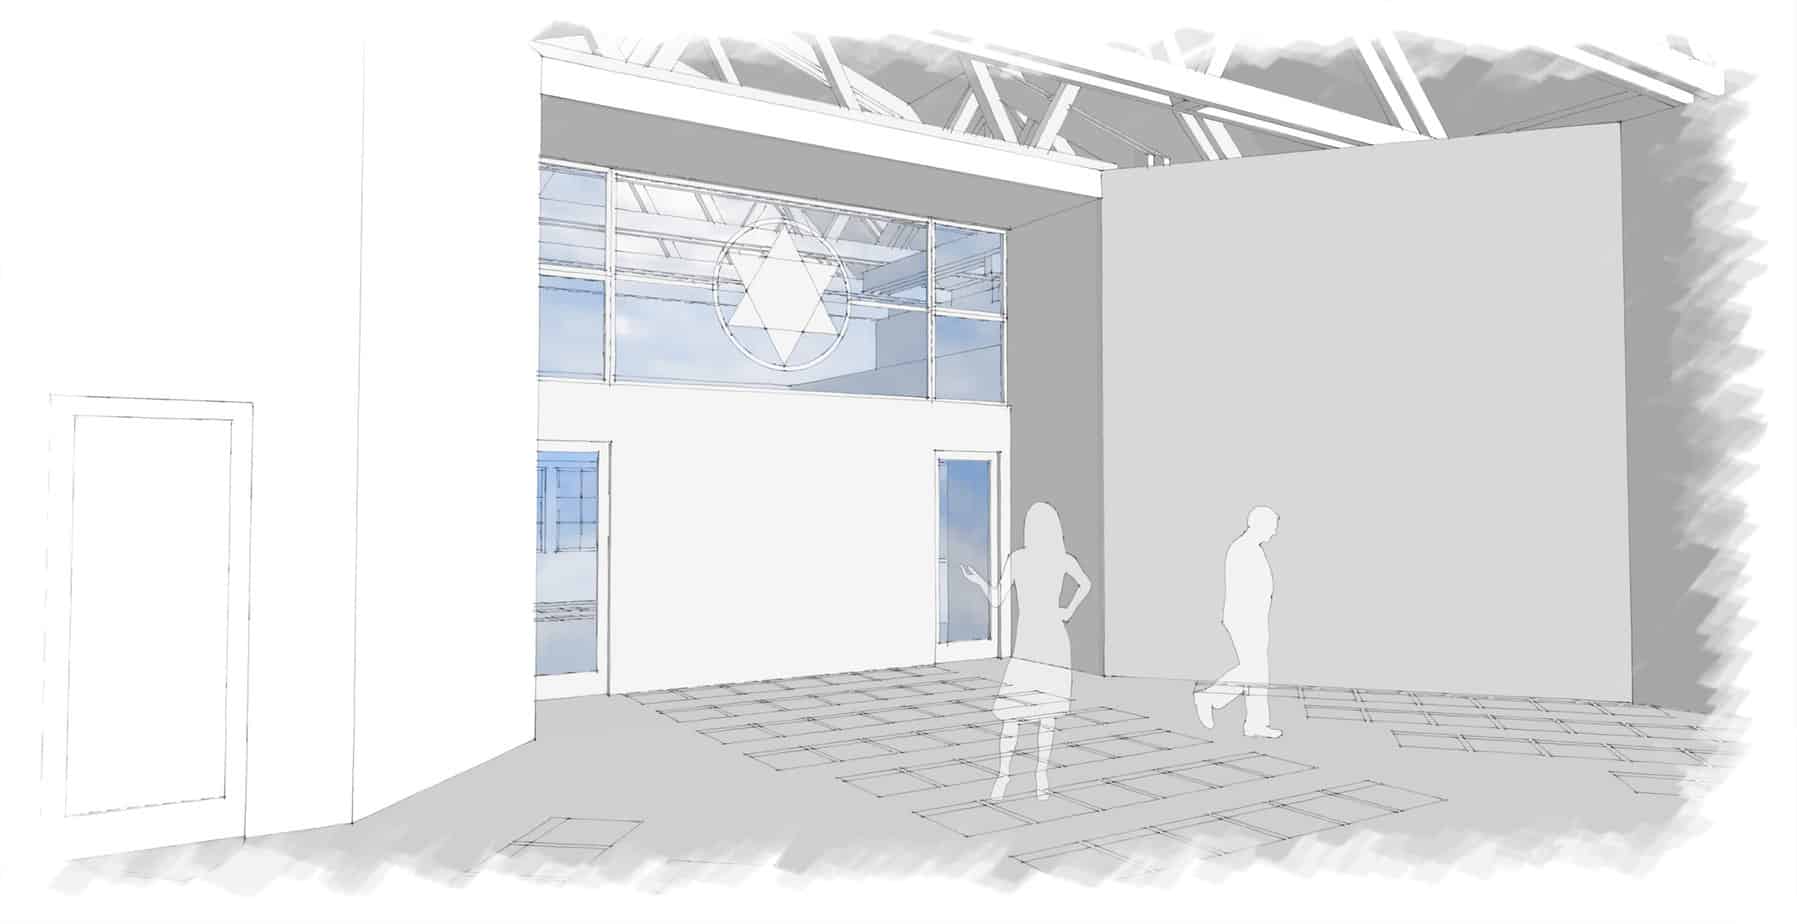 Wood River Jewish Community Center interior 6-45